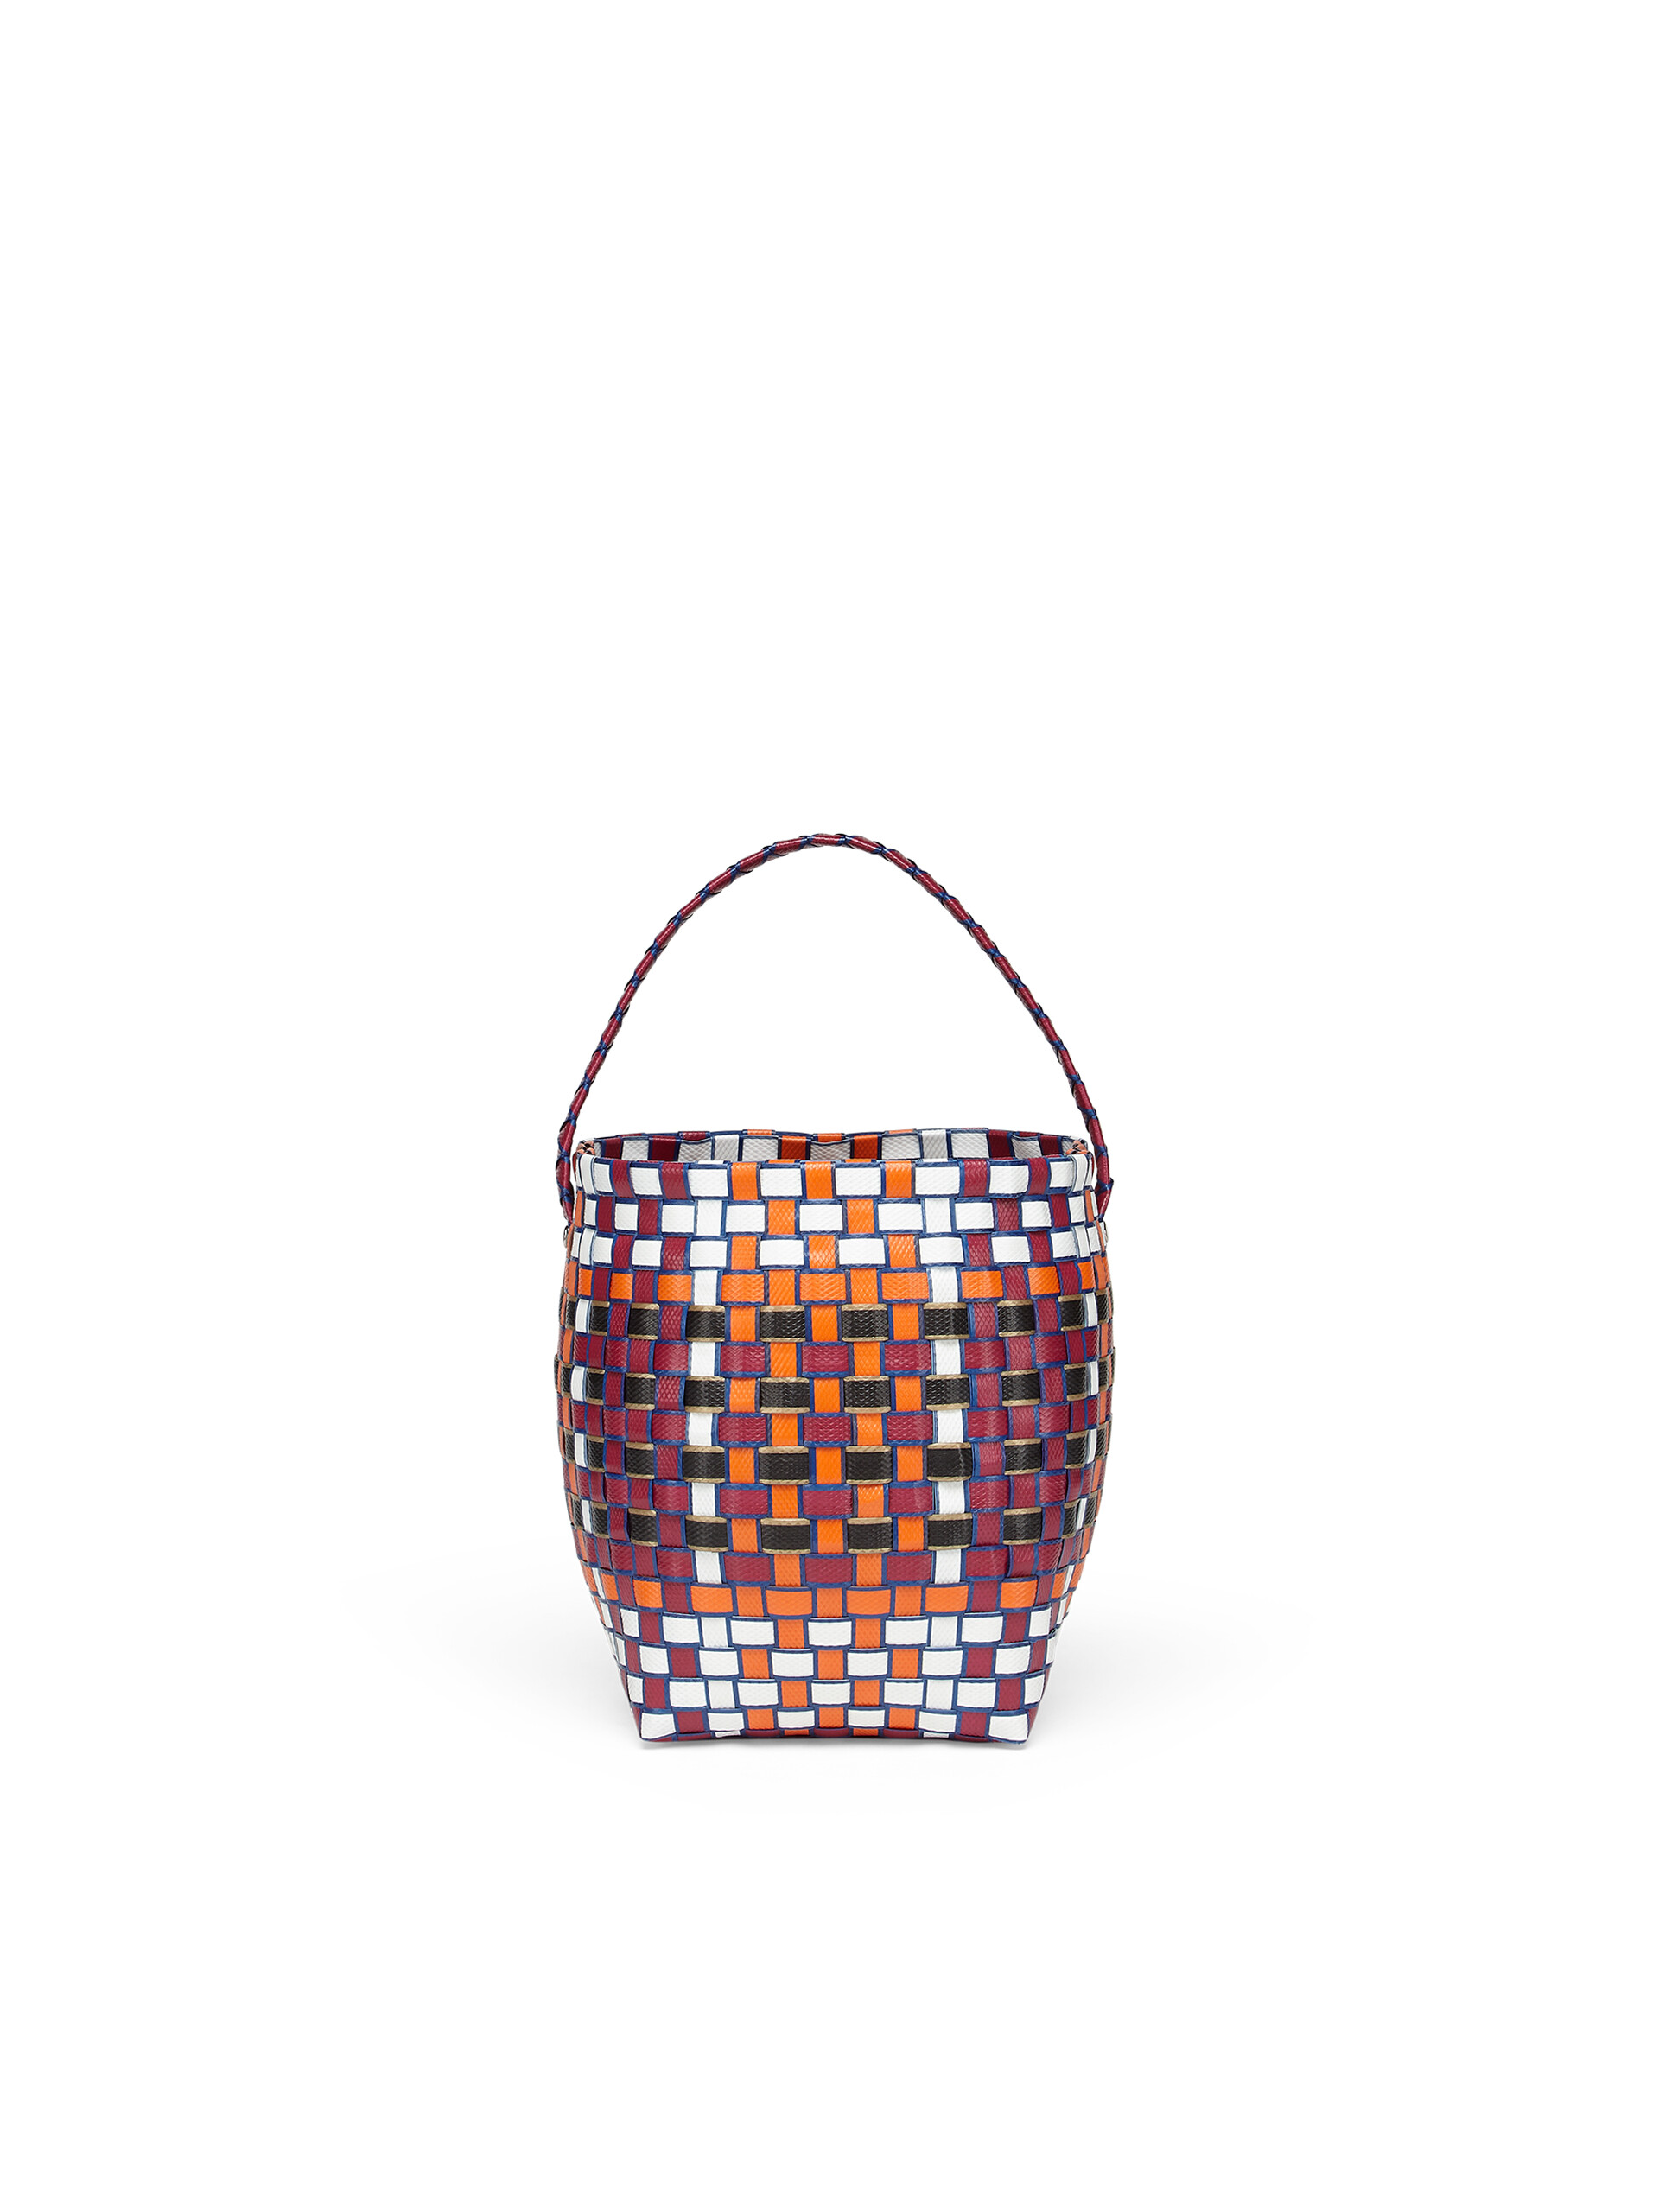 MARNI MARKET POD BASKET bag in orange woven material - Shopping Bags - Image 3